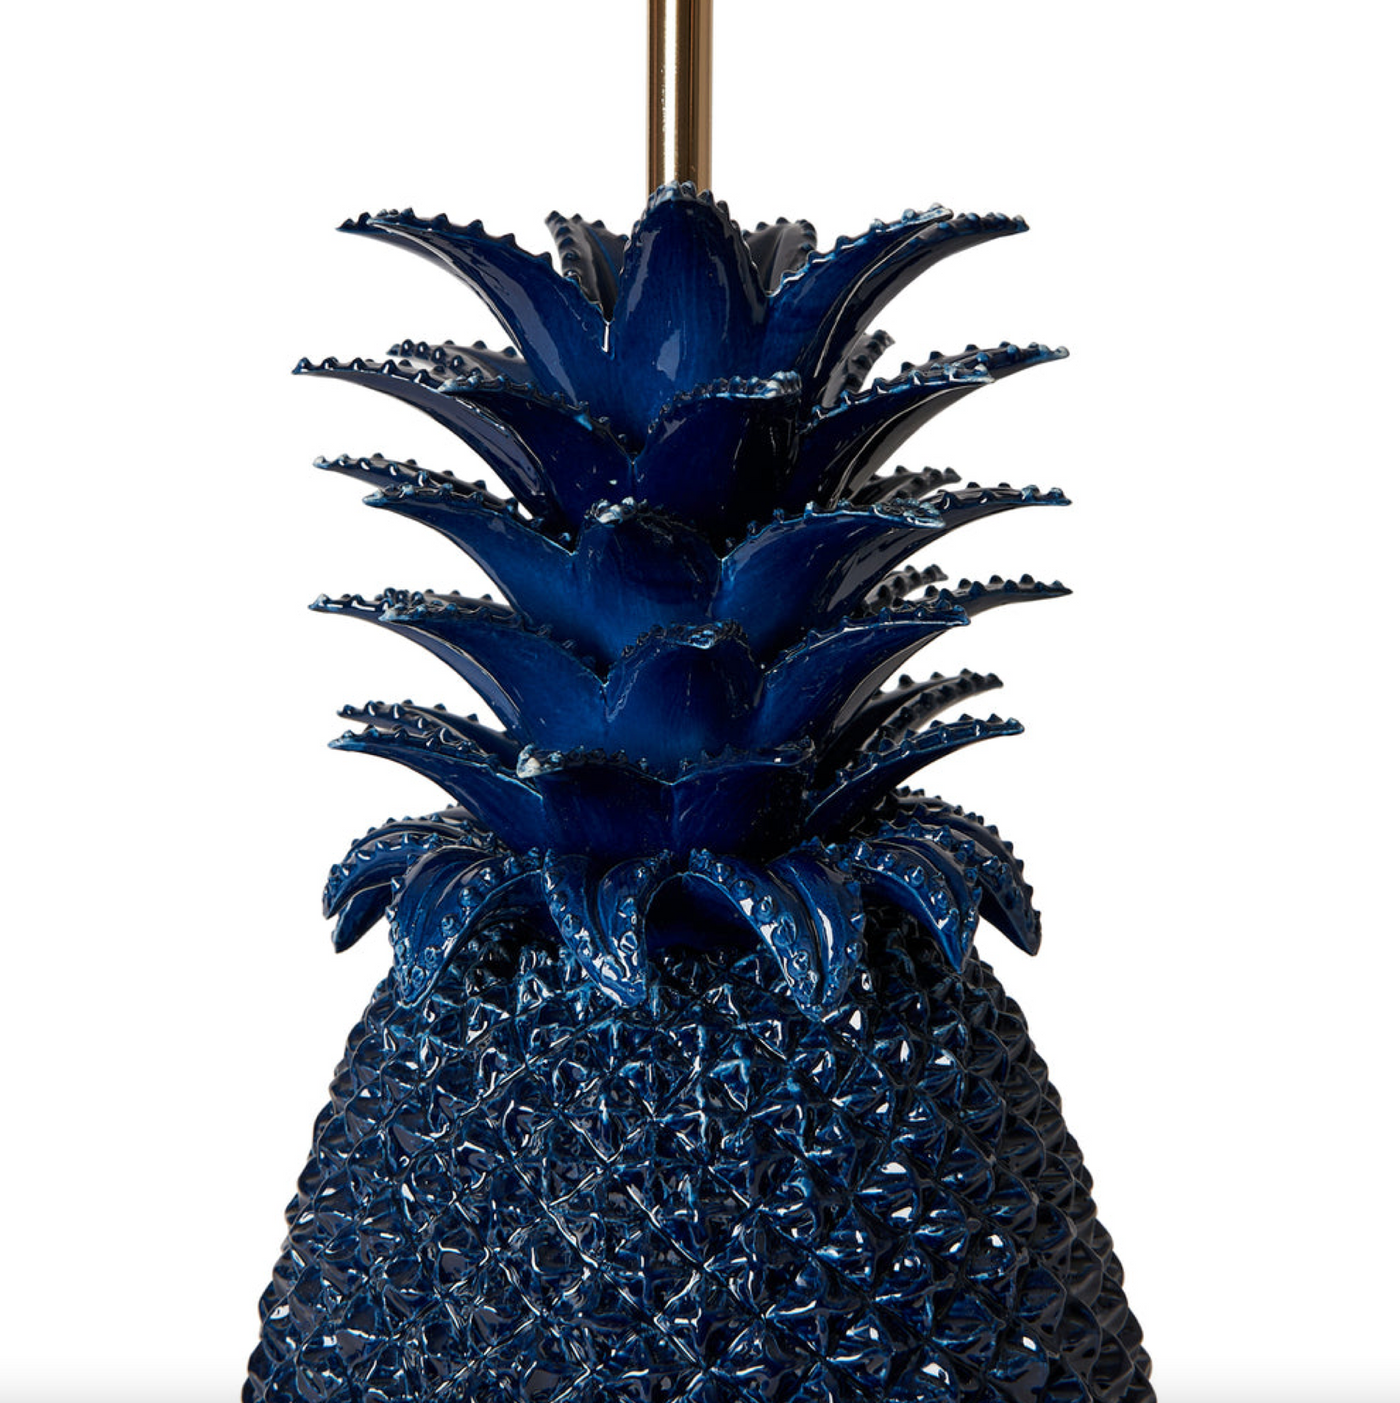 Indigo Pineapple Ceramic Table Lamp by Penny Morrison | Newport Lamp And Shade | Located in Newport, RI